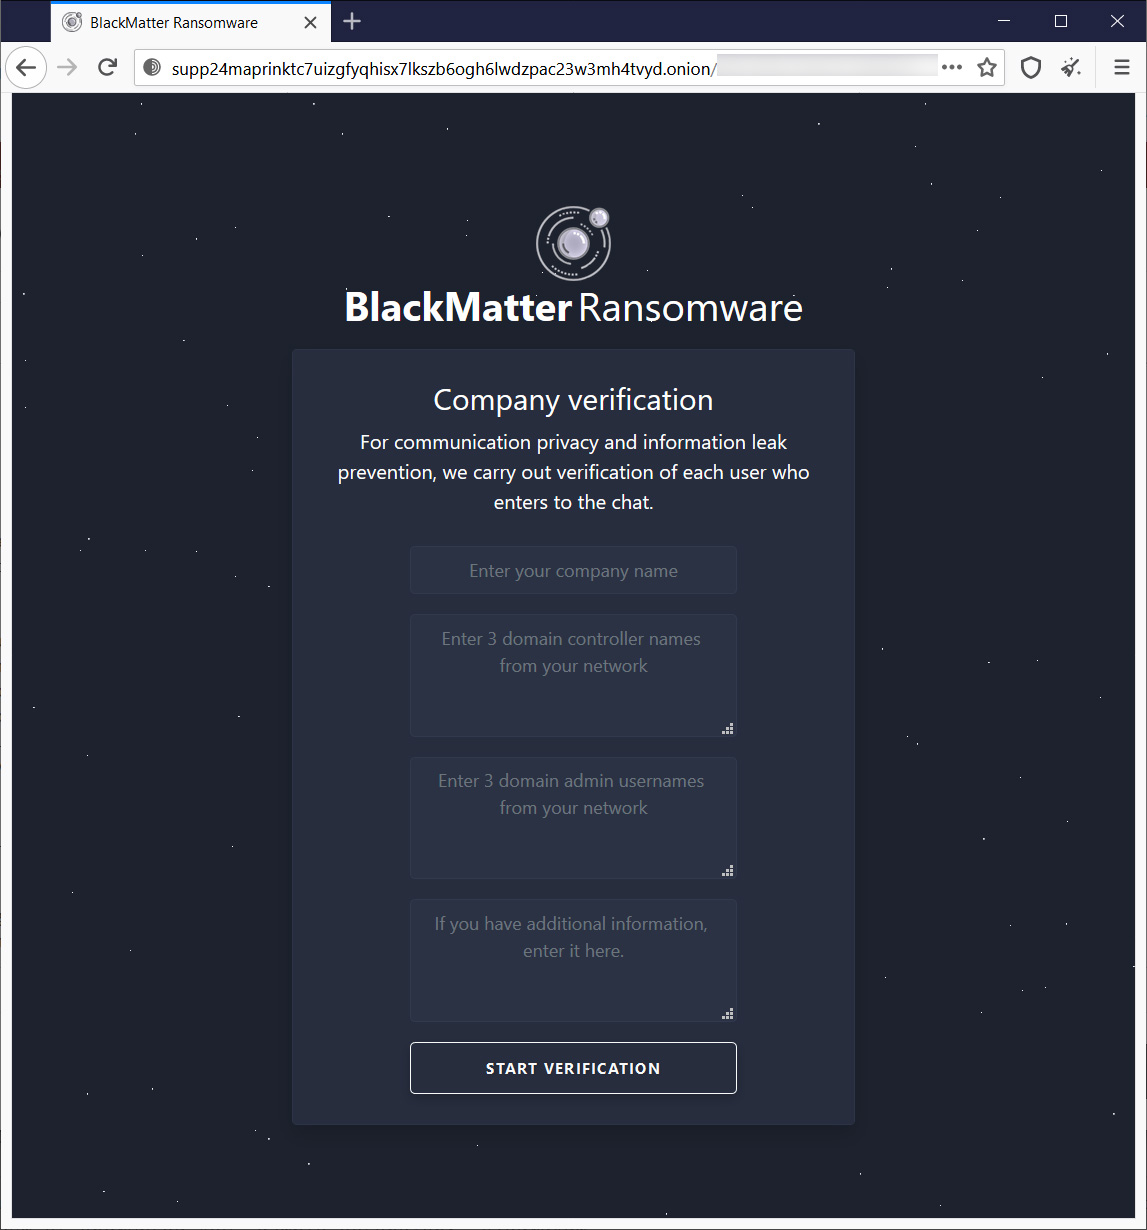 blackmatter-payment-site-verification.jpg